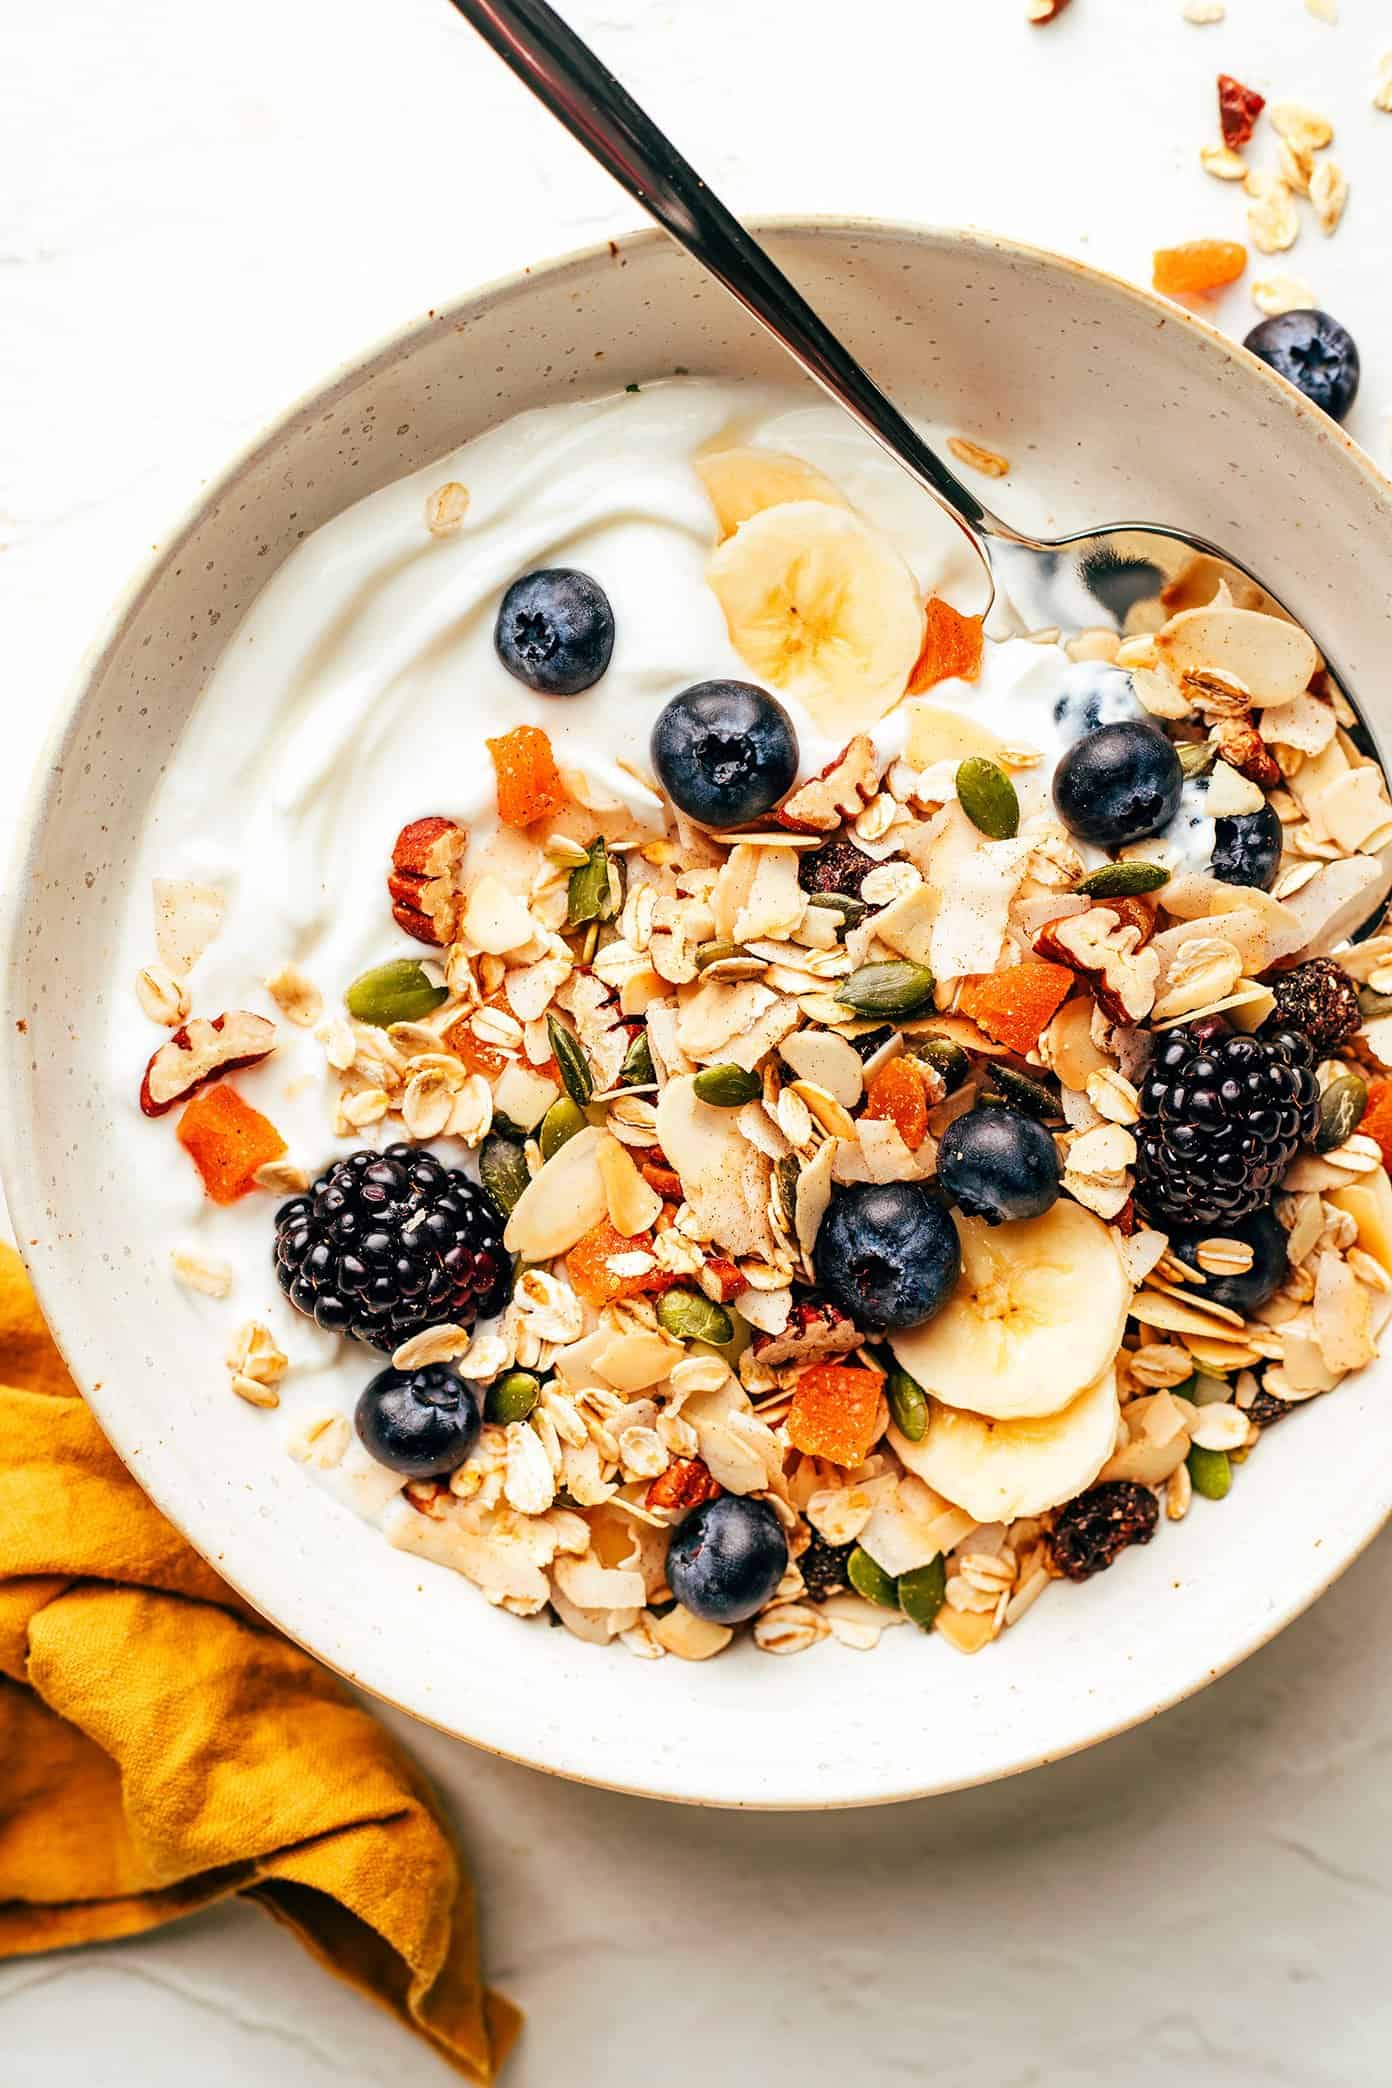 Muesli with Greek yogurt, berries and bananas